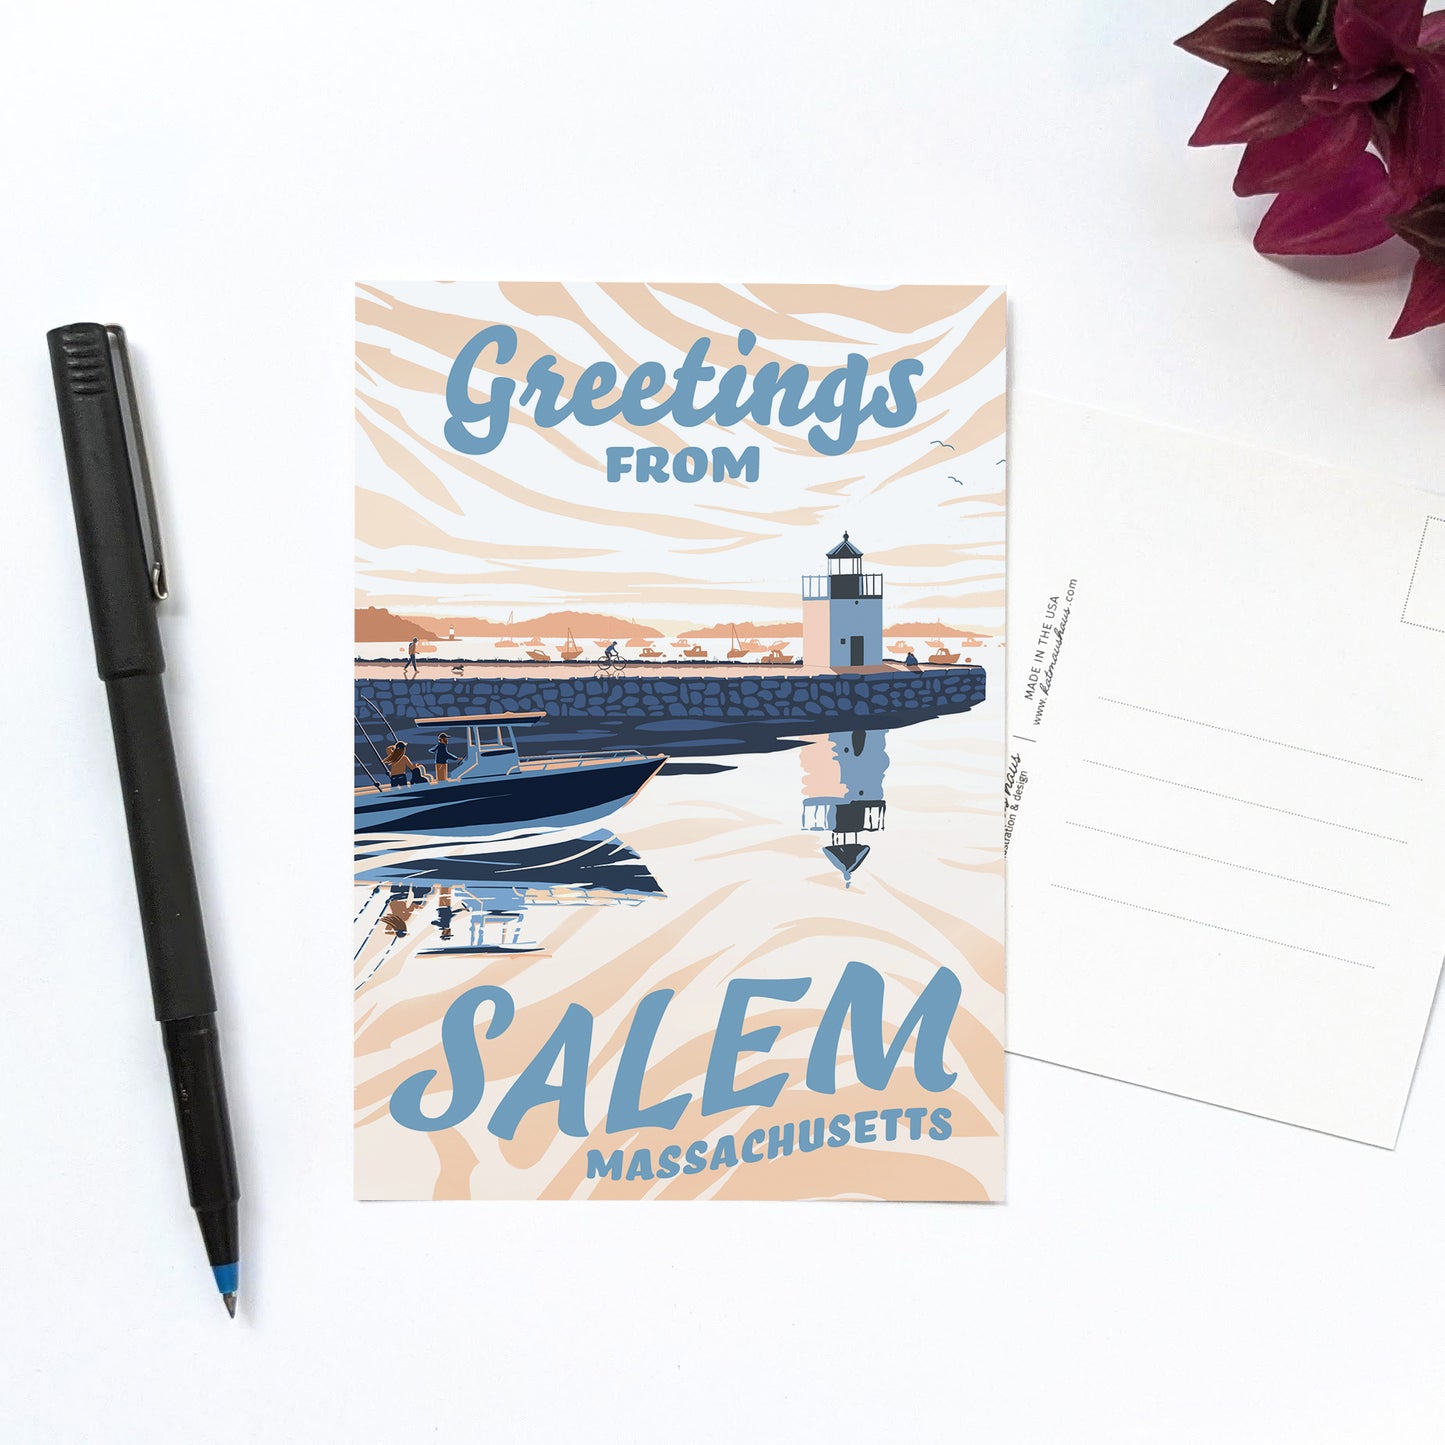 "Greetings from Salem, Massachusetts" Postcard